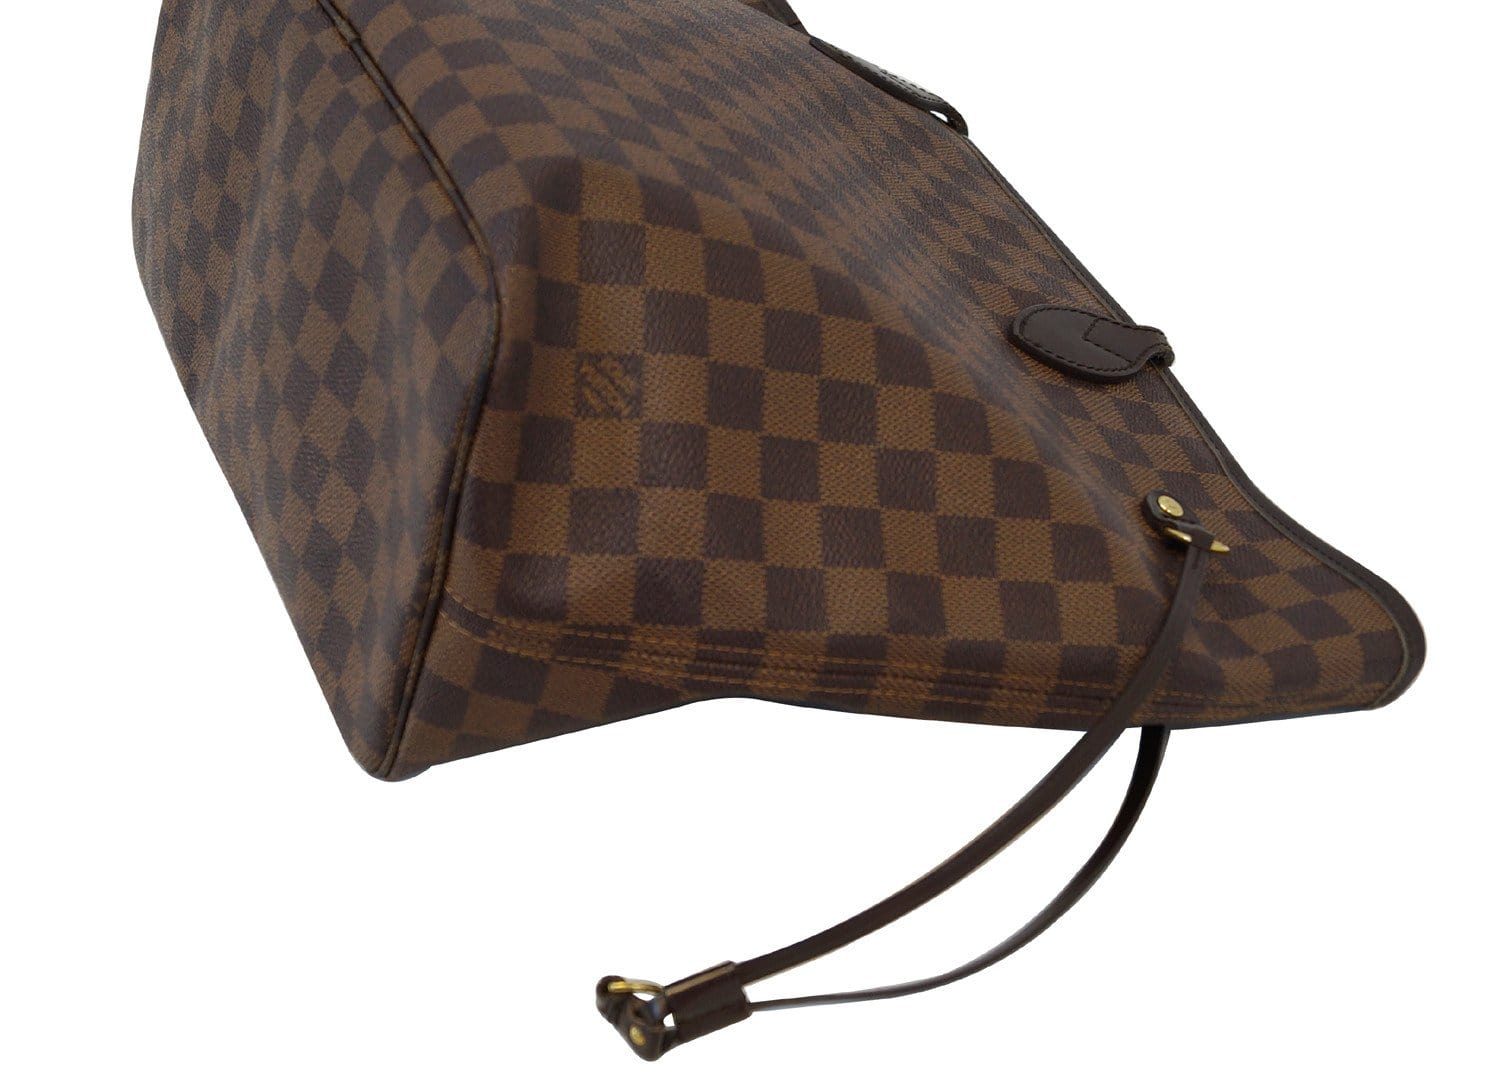 Louis Vuitton Neverfull MM Damier Ebene Cherry Red Tote Shoulder Bag(S – AE  Deluxe LLC®